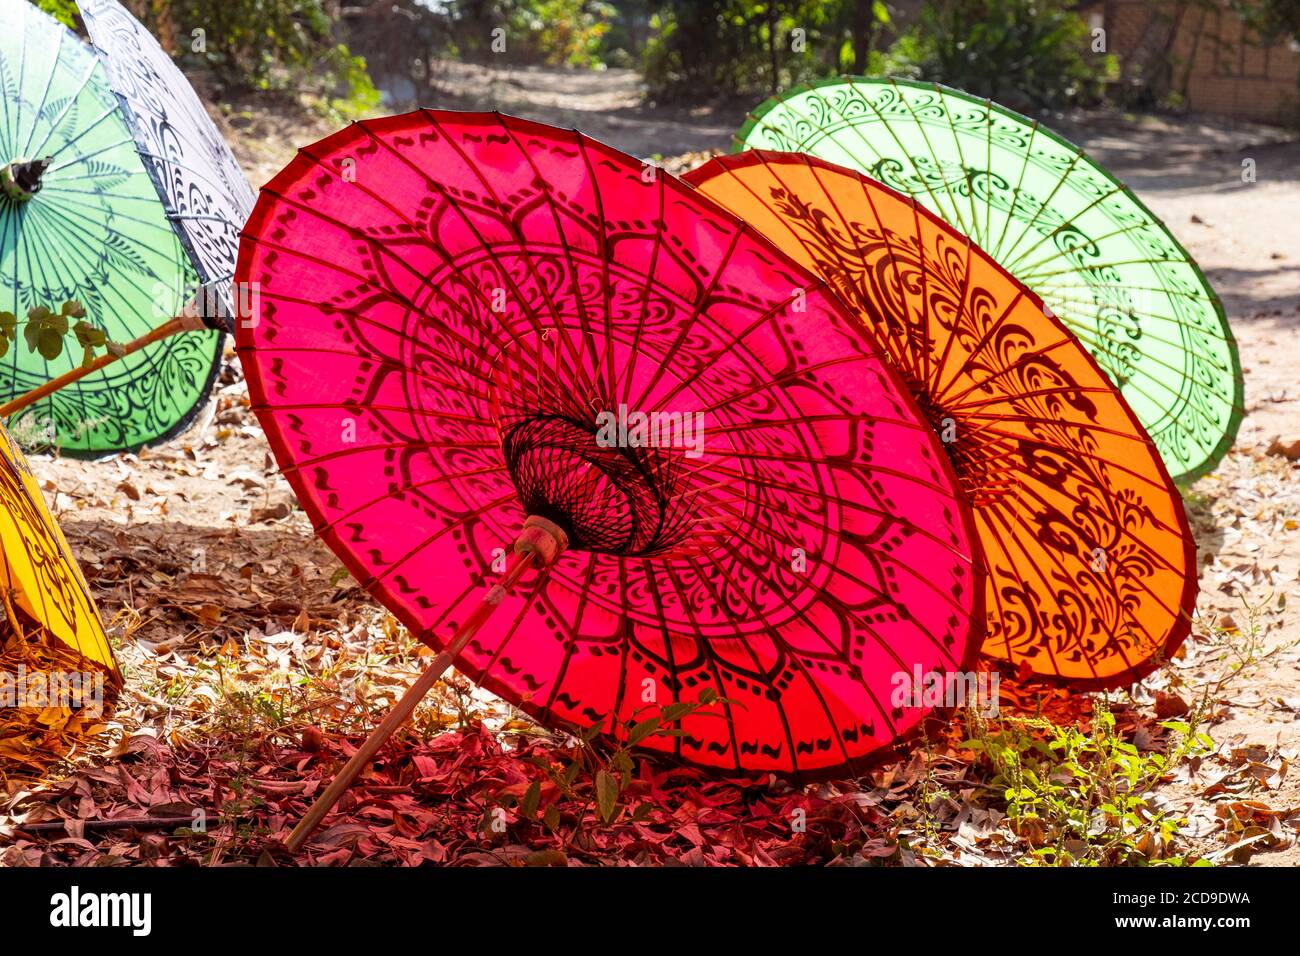 Bamboo paper umbrella hi-res stock images - Alamy